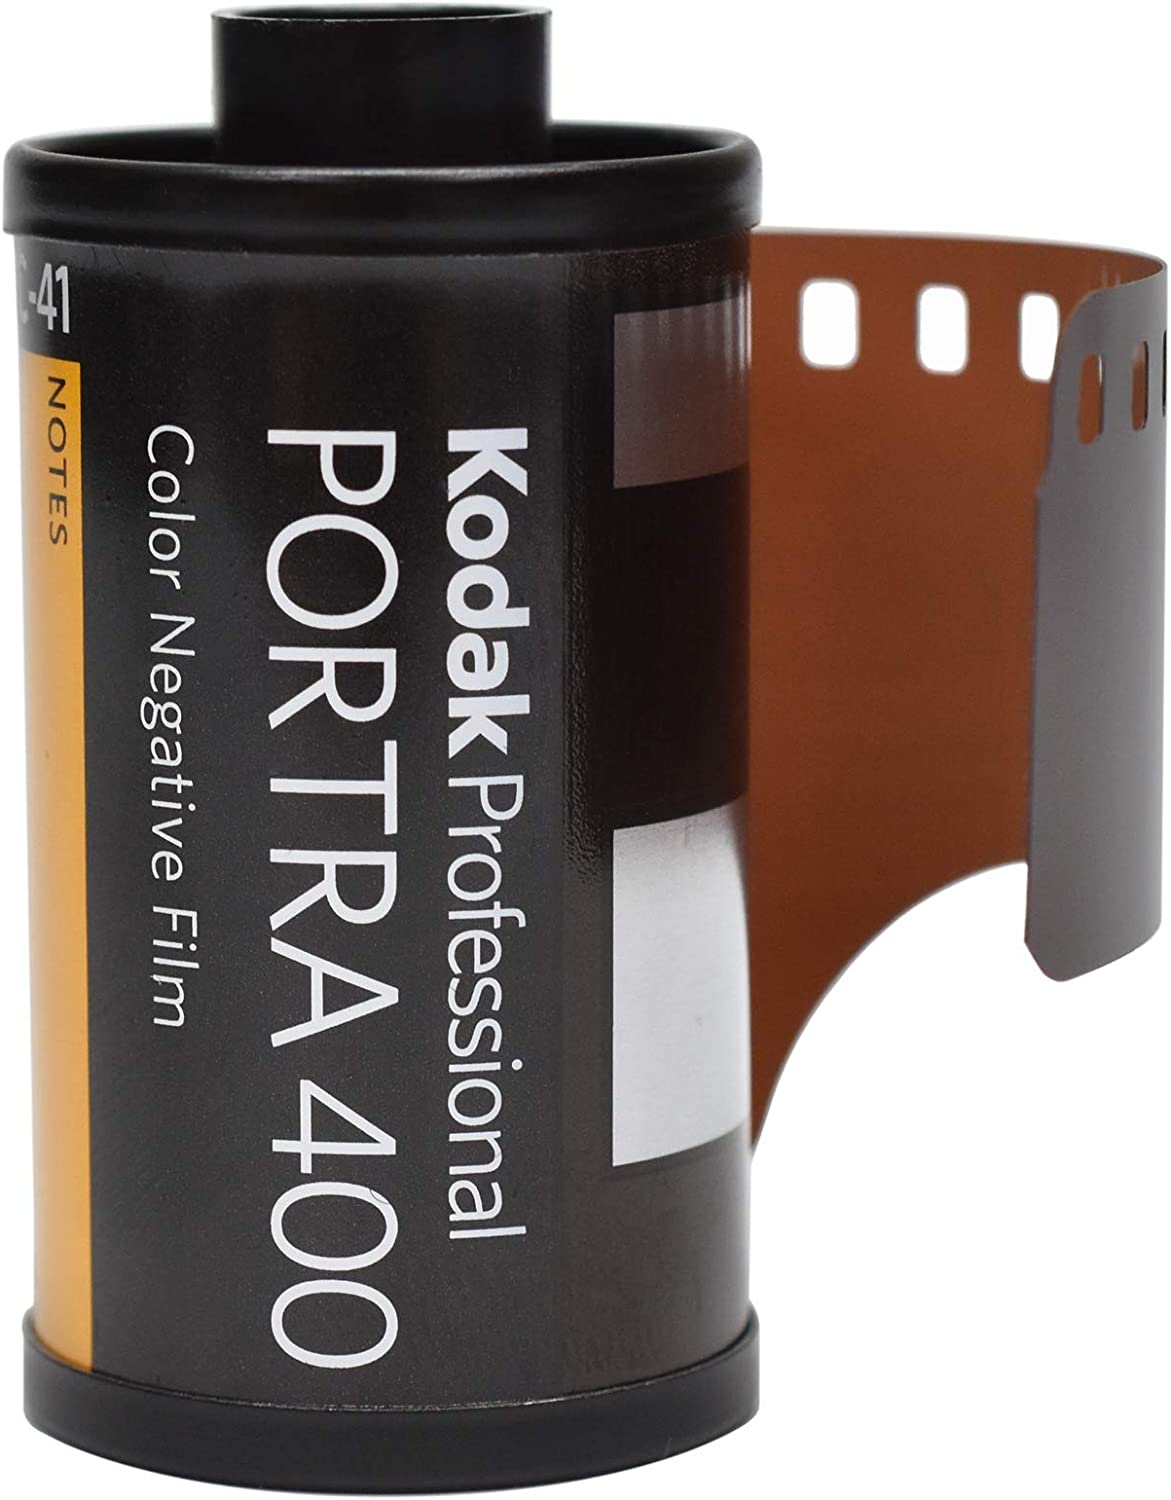 Kodak Professional Portra 400 Color Negative Film (35mm Roll Film, 36 Exposures, 1 Roll)